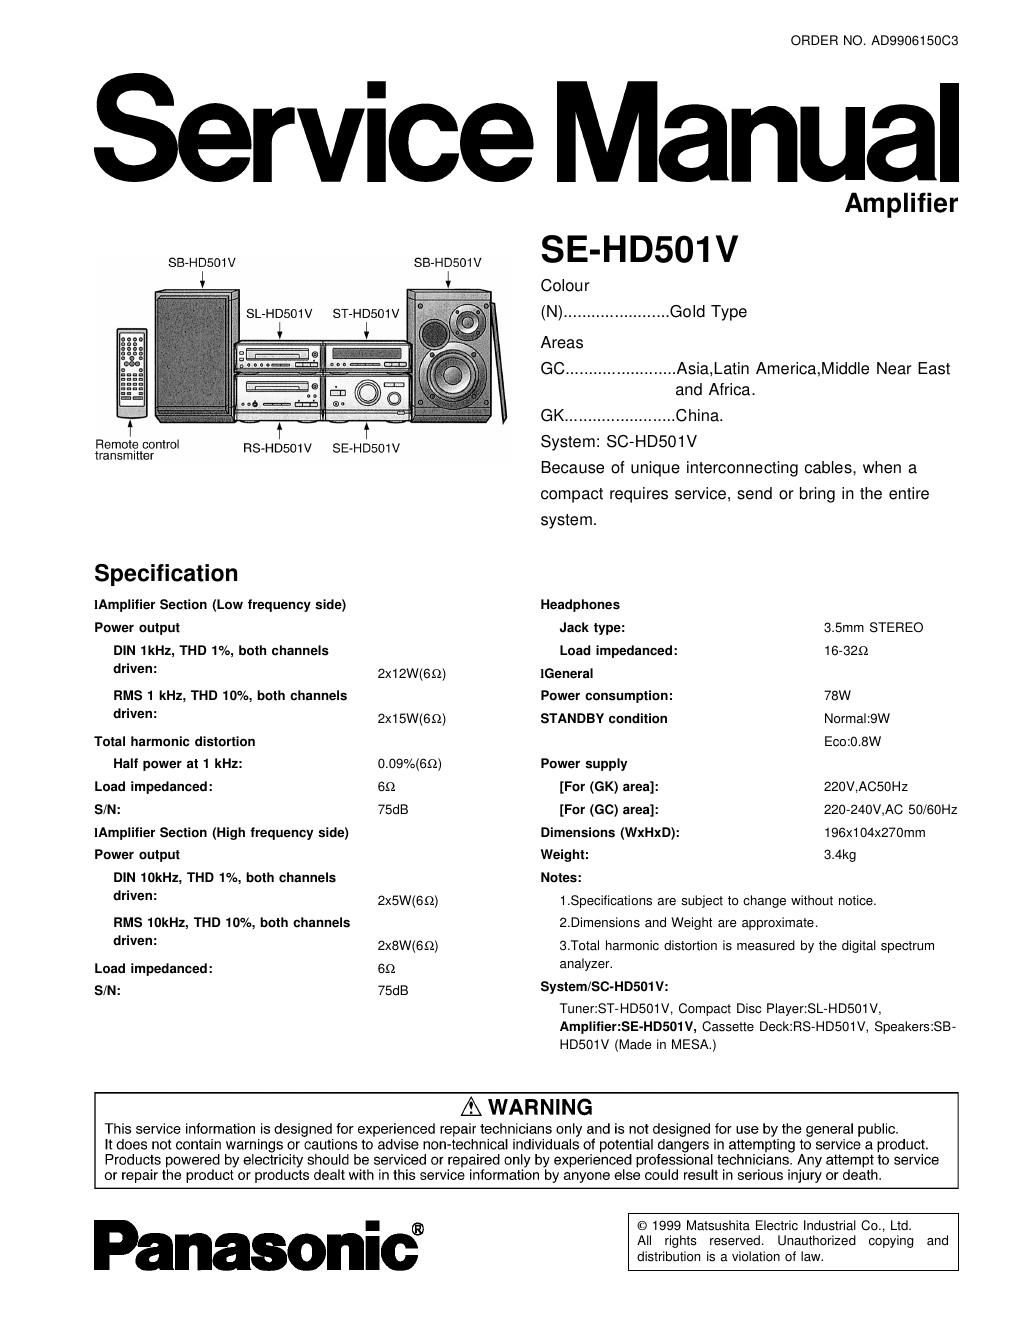 panasonic se hd 501 v service manual